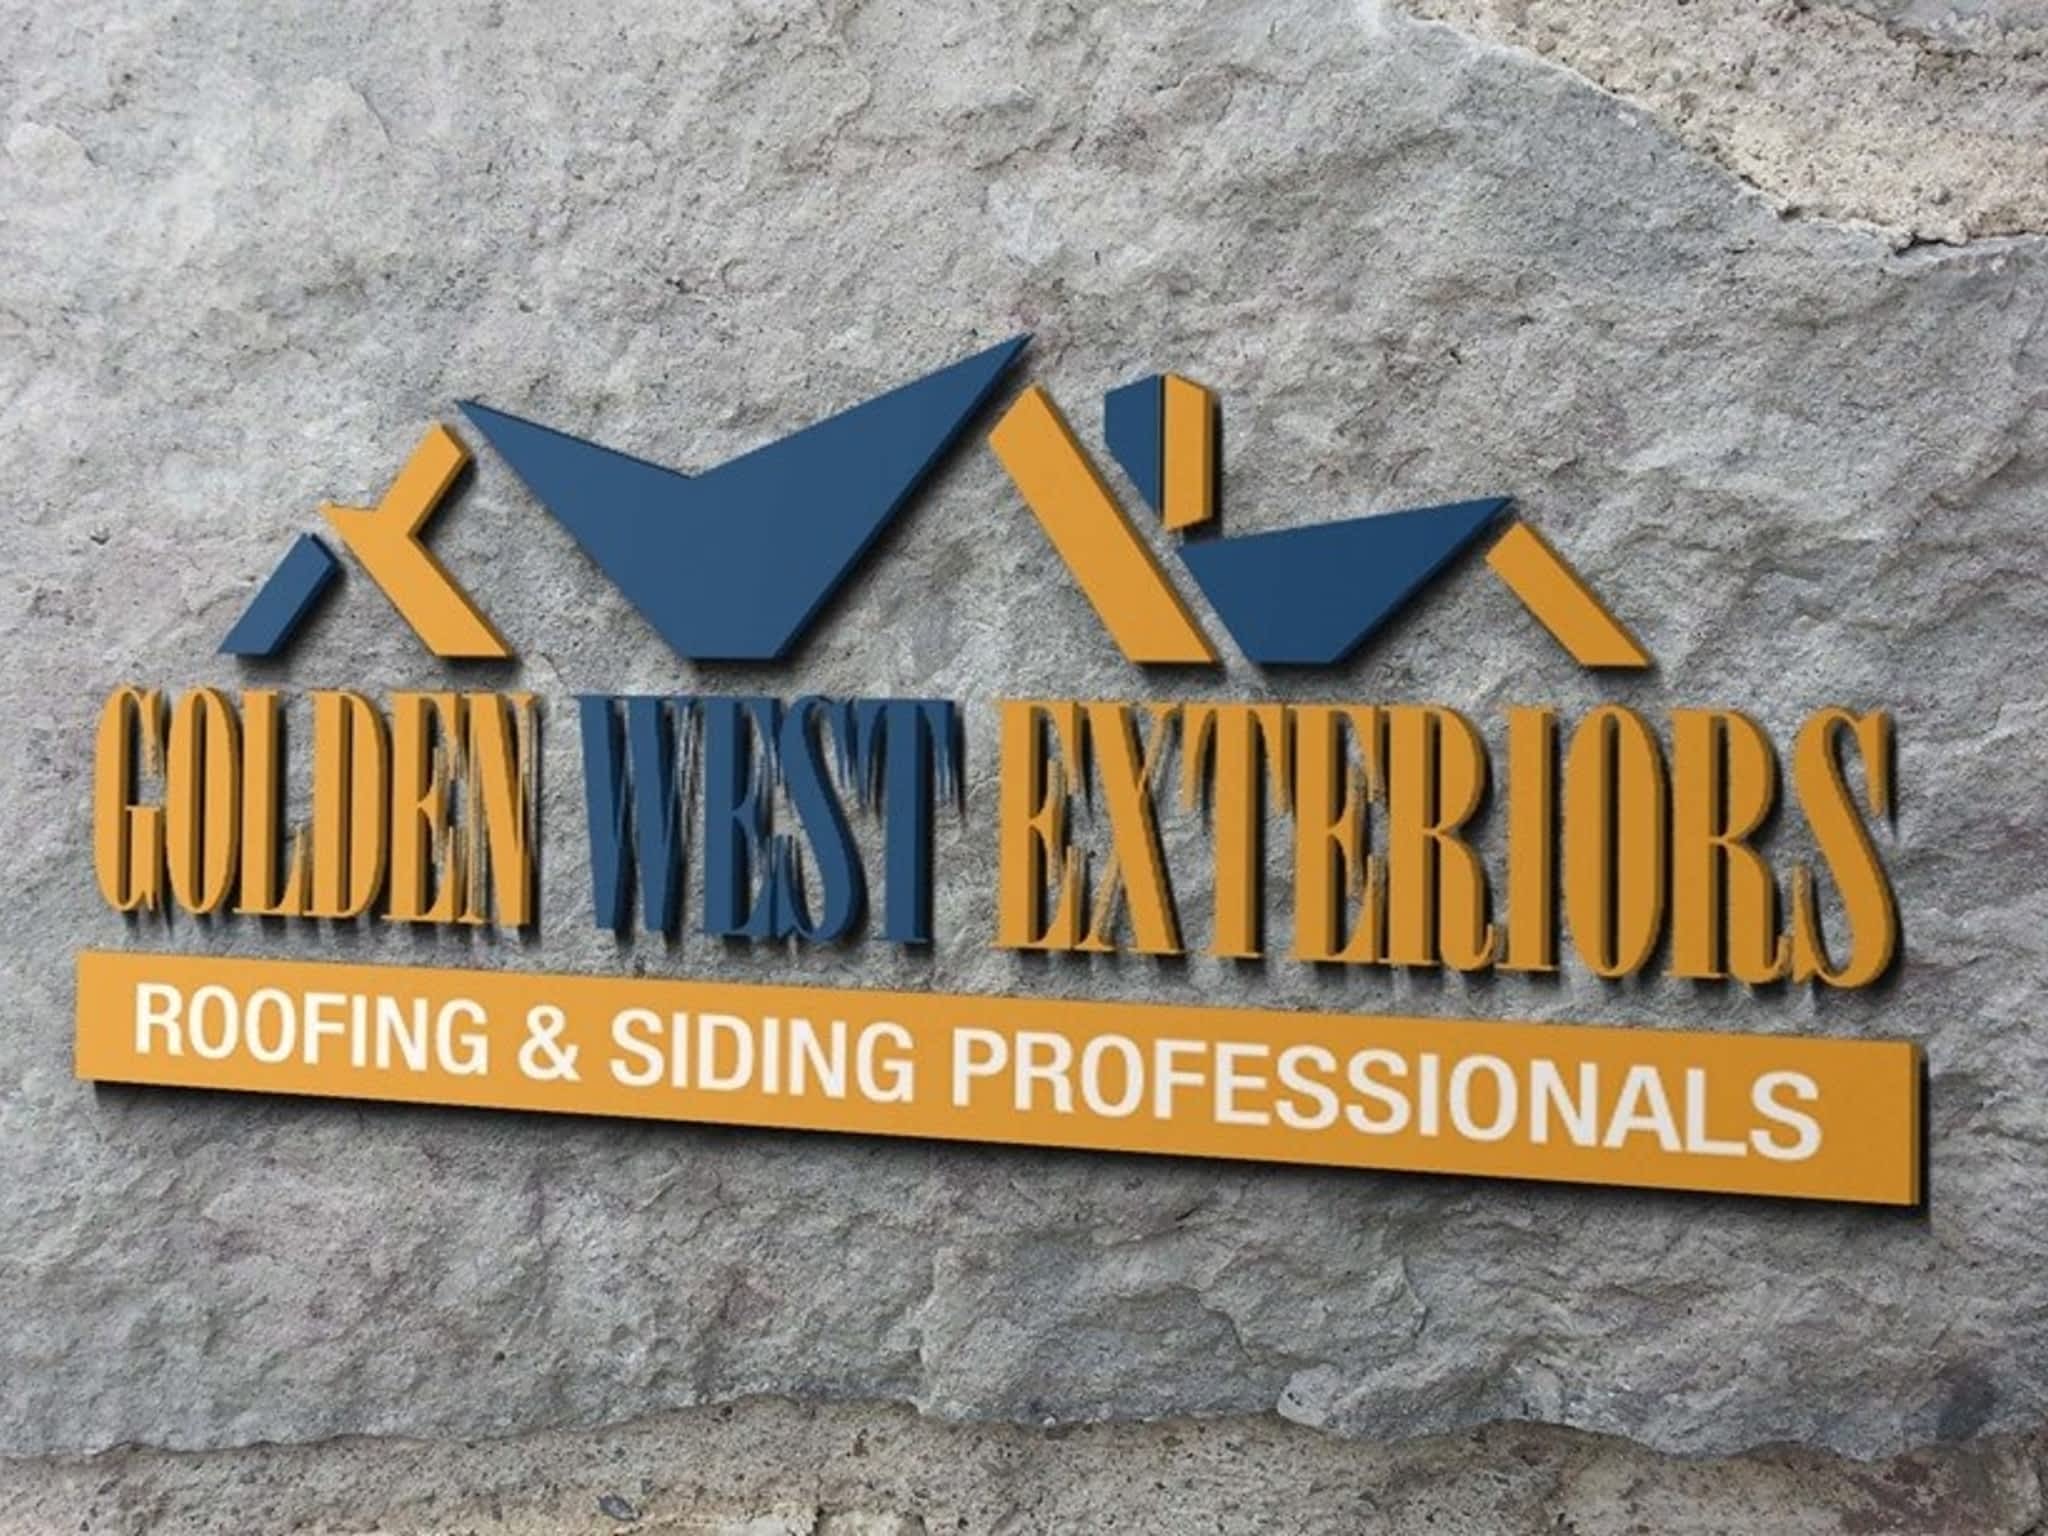 photo Golden West Exteriors Inc